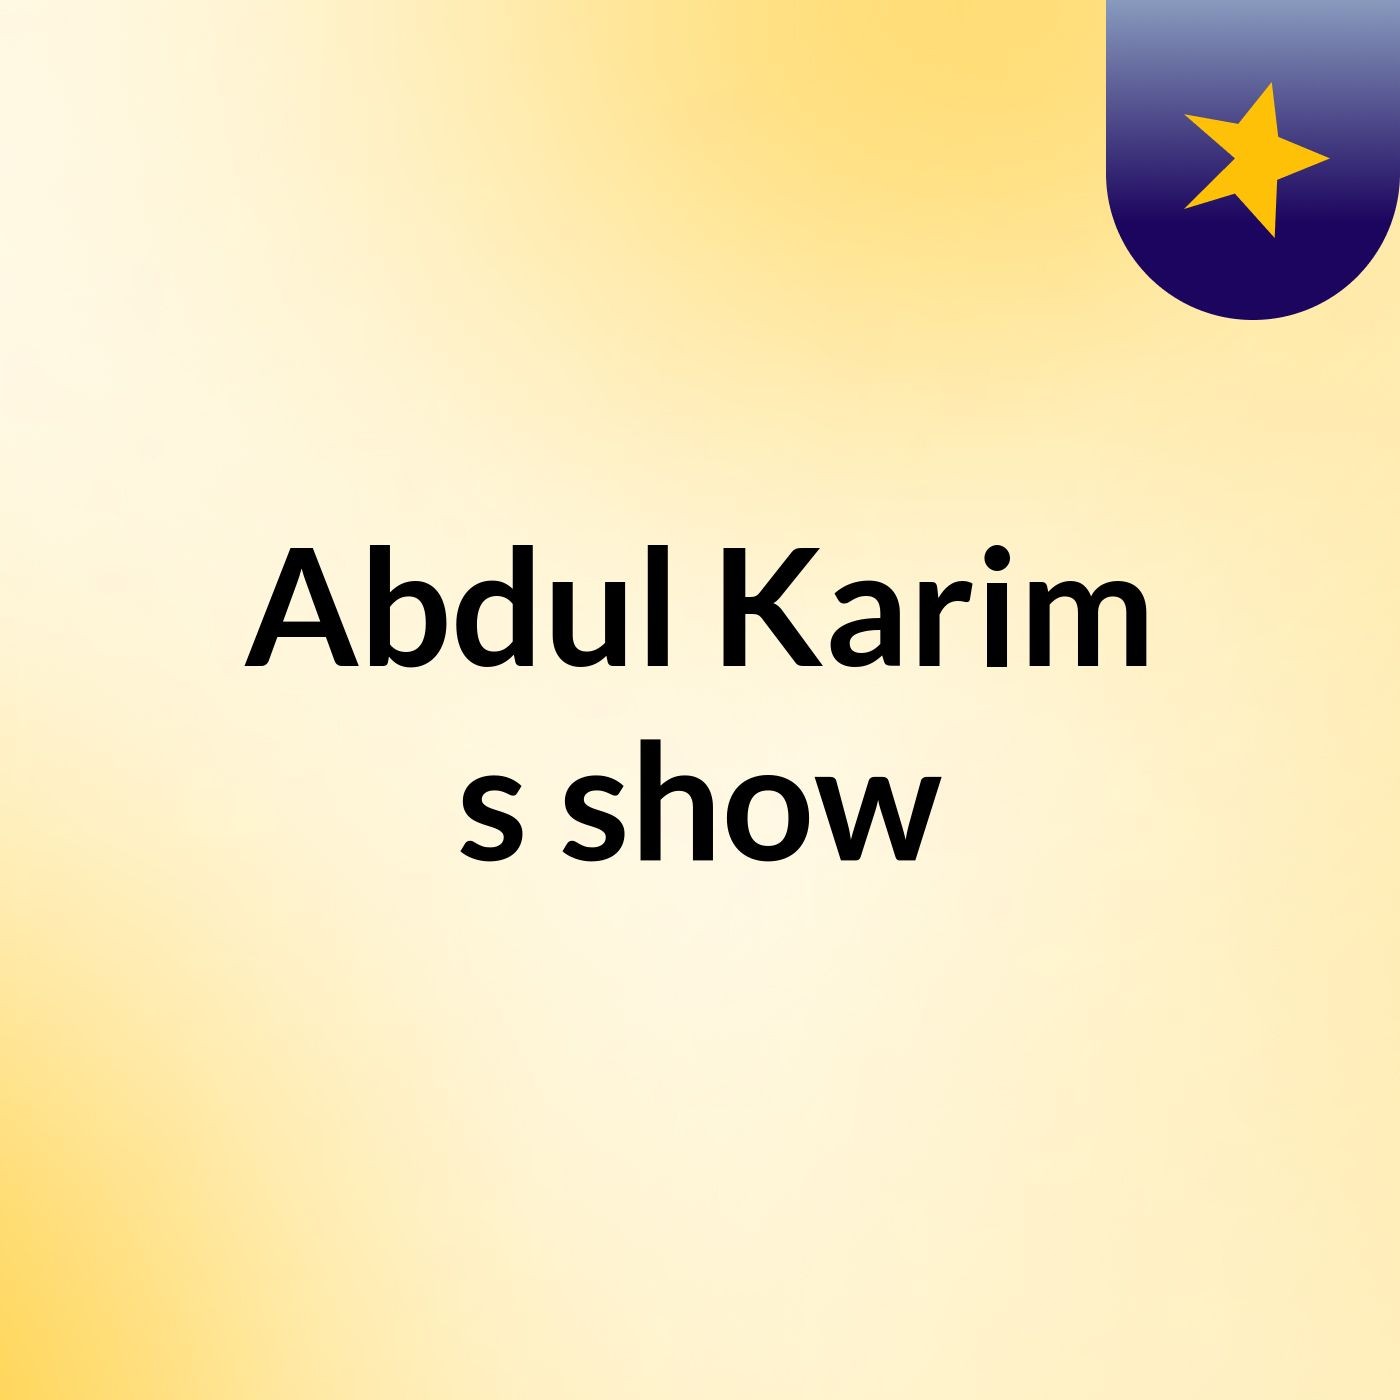 Abdul Karim's show